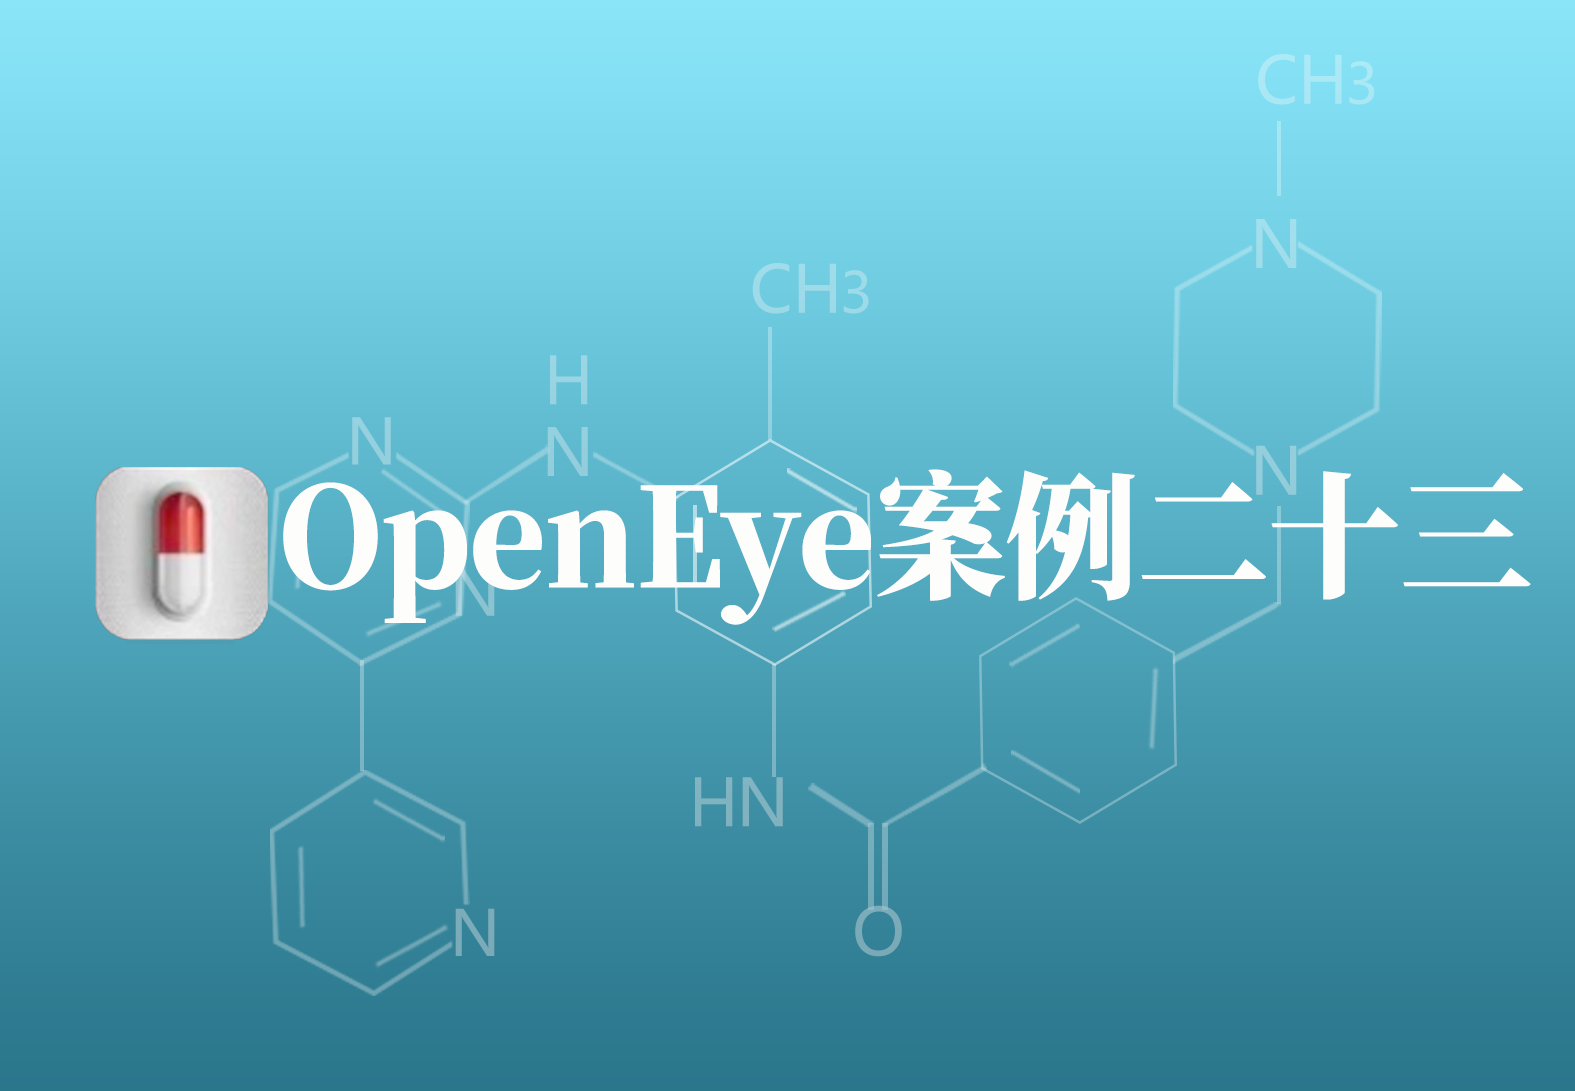 OpenEye应用案例二十三：新型G9a抑制剂的发现